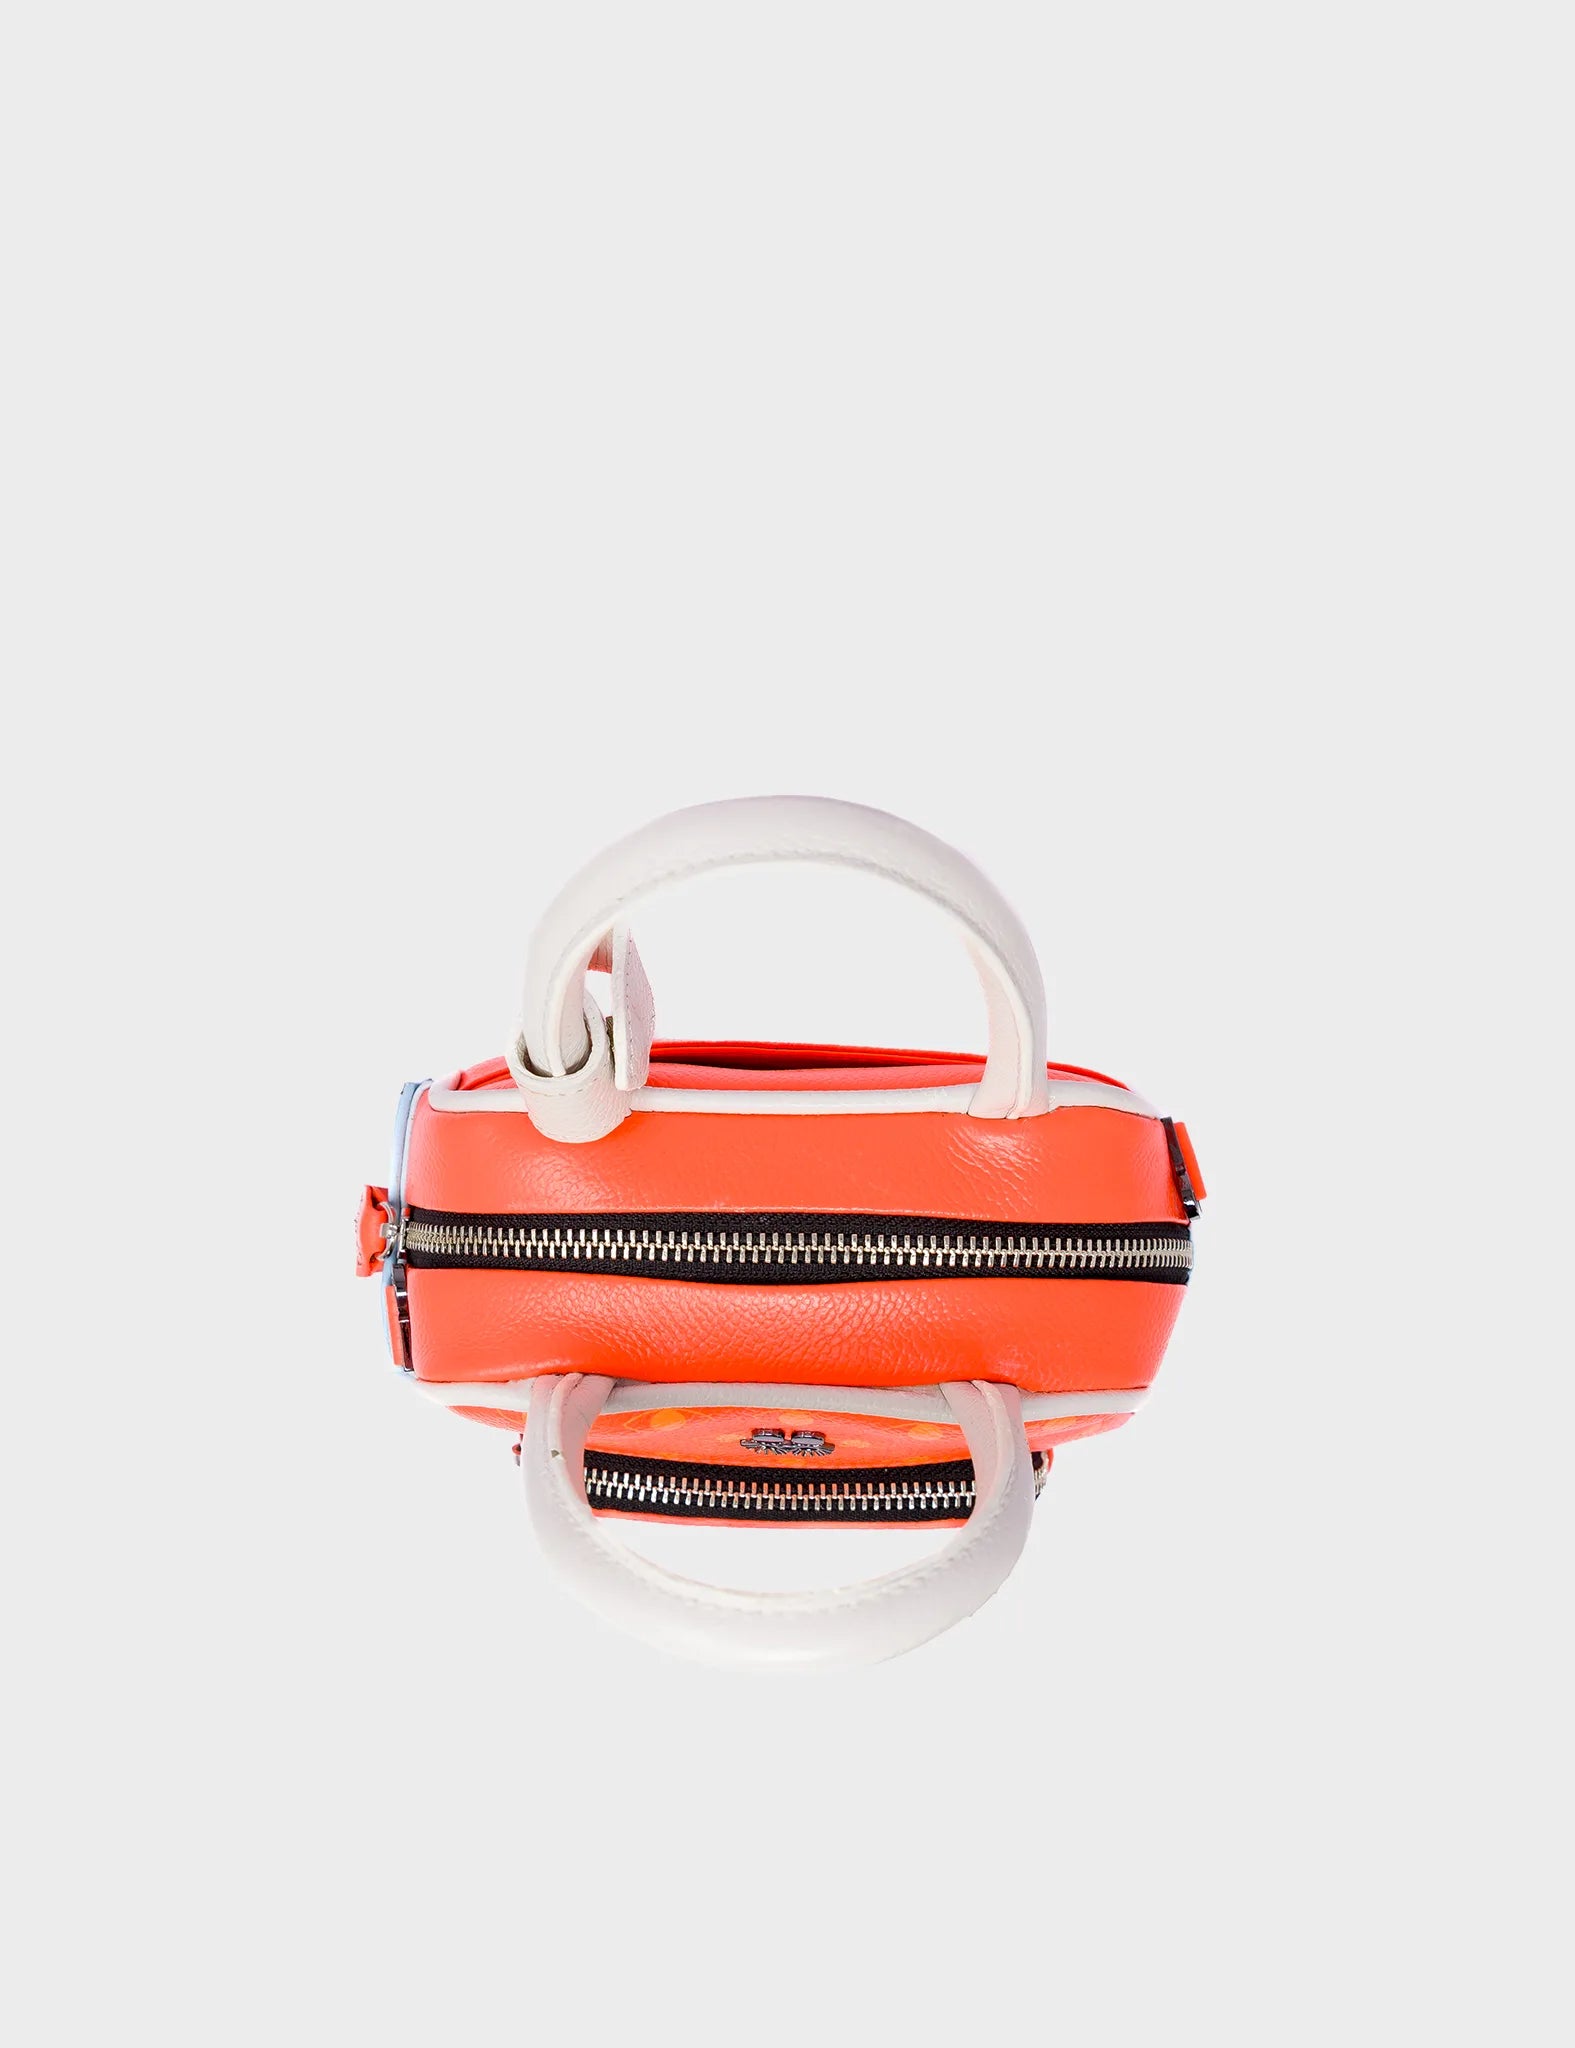 Small Crossbody Neon Orange Leather Bag - Eyes Pattern Printed - Top 